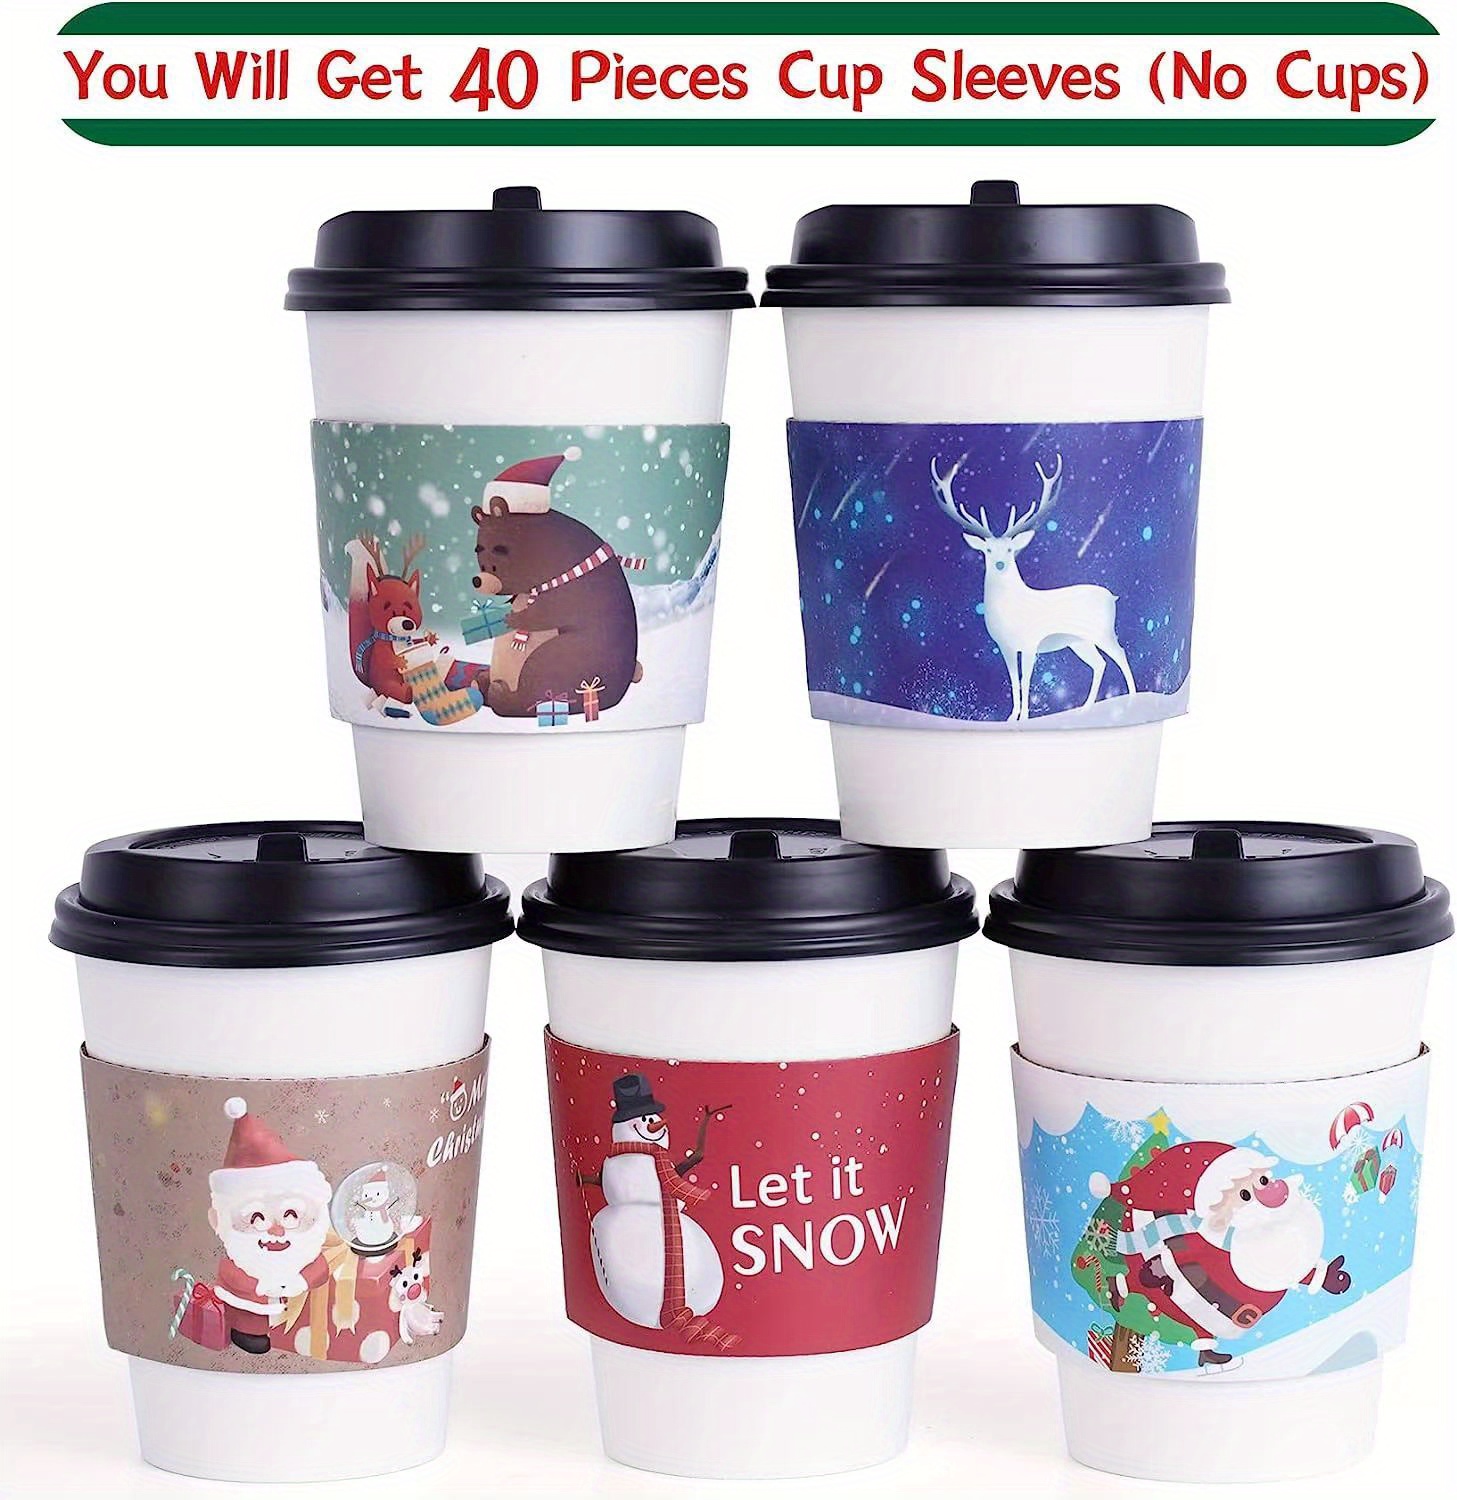 Custom 20 oz Paper Cups